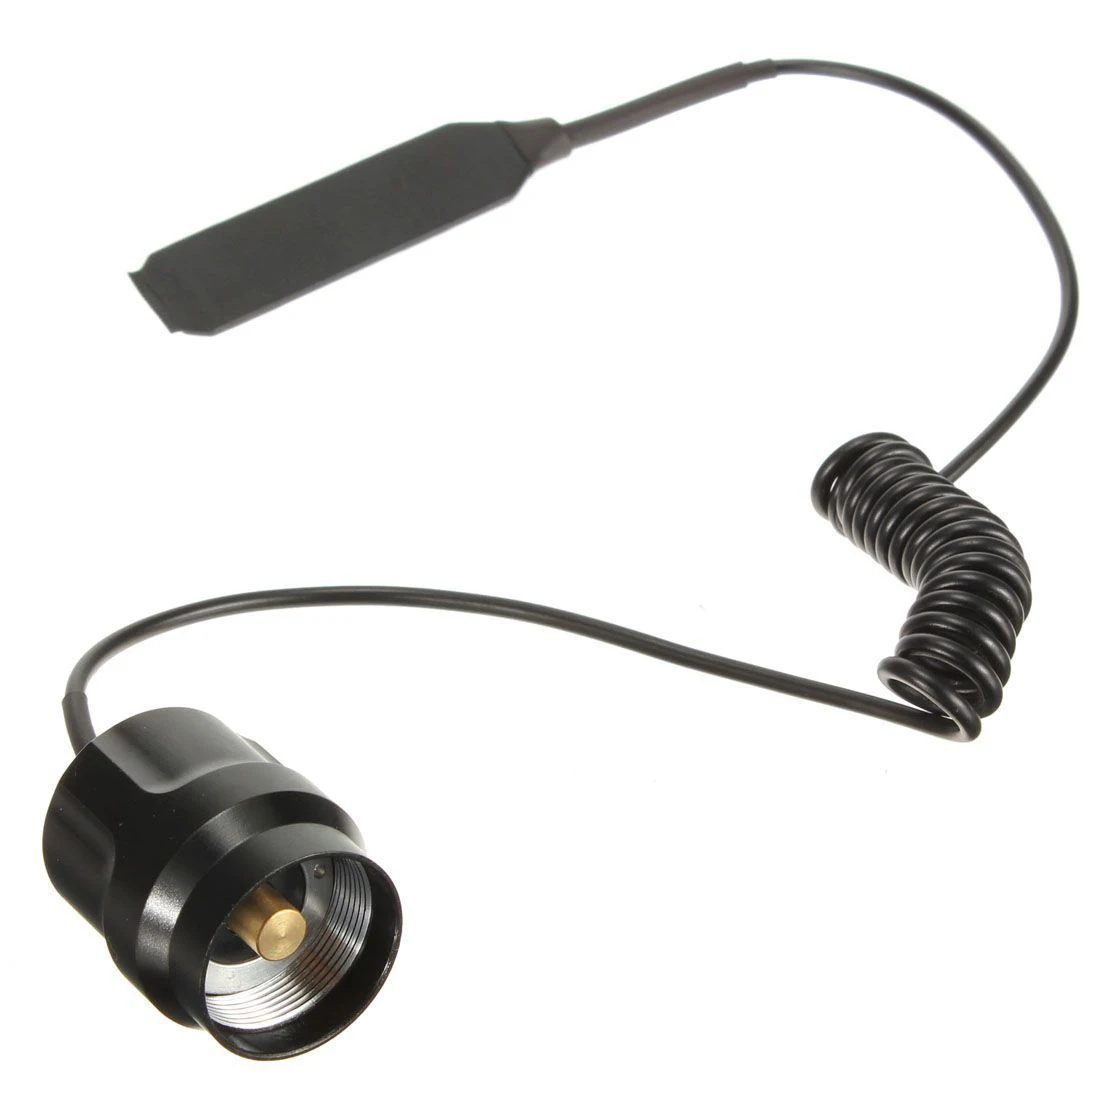 

Remote Control Remote Pressure Switch For Ultrafire SuperFire C8-Q5 C8-R5 C8-T6 504B Trustfire C8Suit LED Flashlight Lamp Black